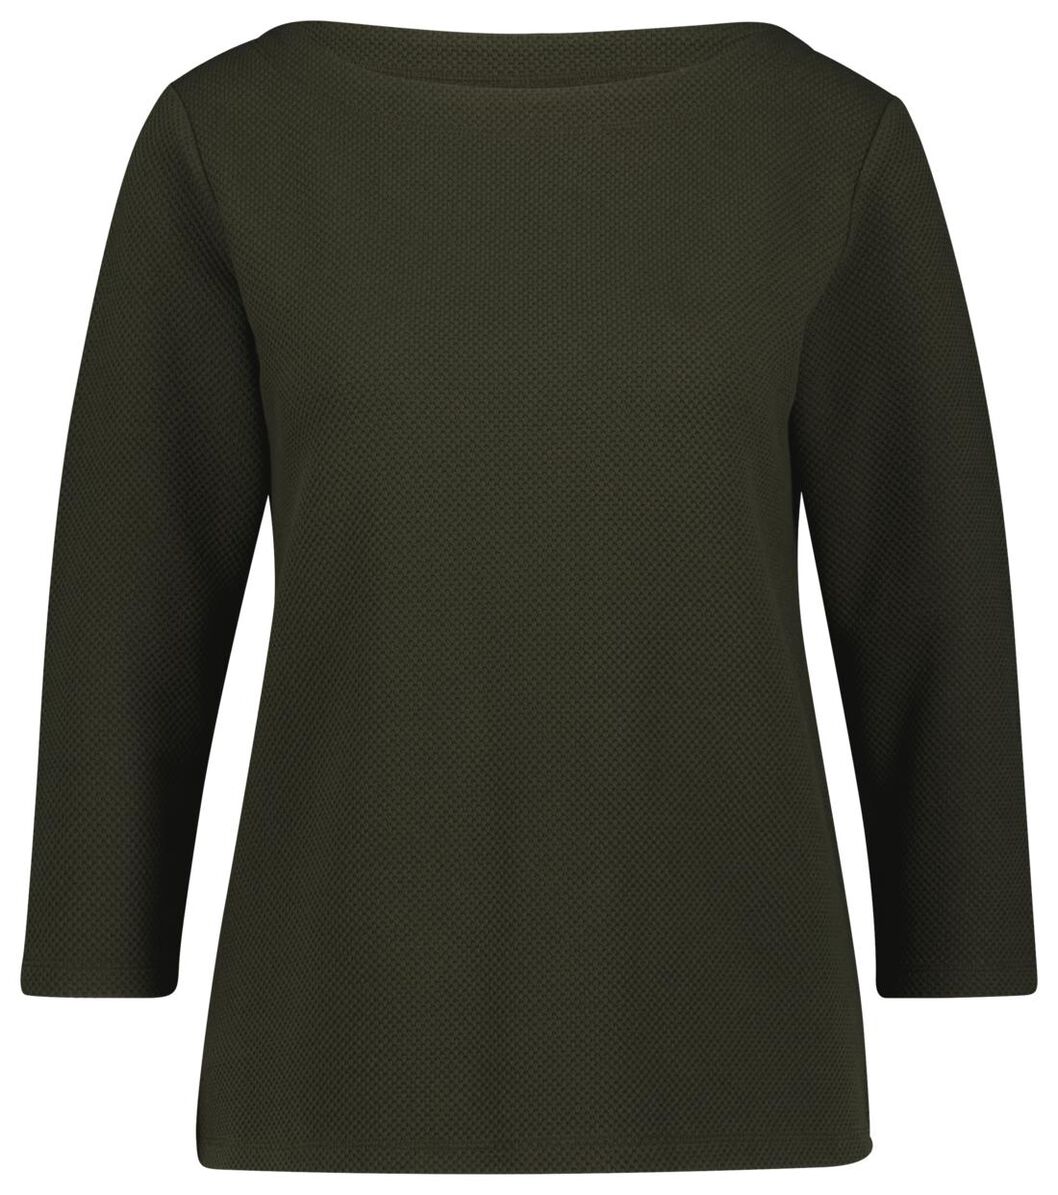 Damen-Shirt, Struktur olivgrün olivgrün - 1000025283 - HEMA